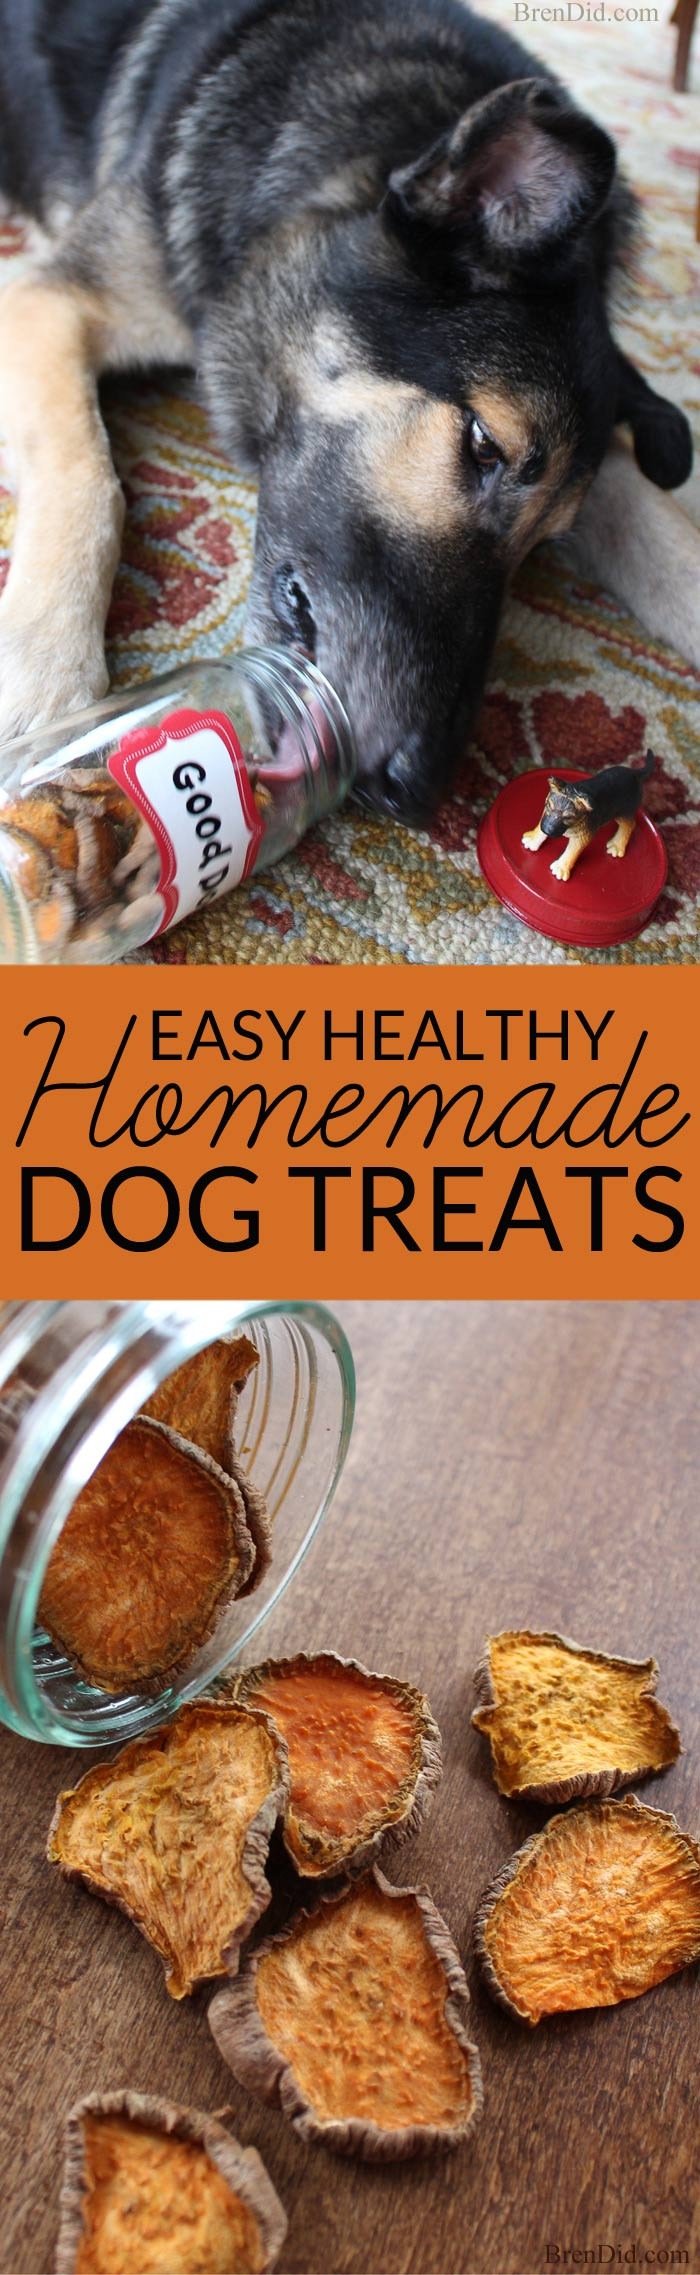 Healthy DIY Dog Treats
 Healthy Homemade Dog Treats Bren Did